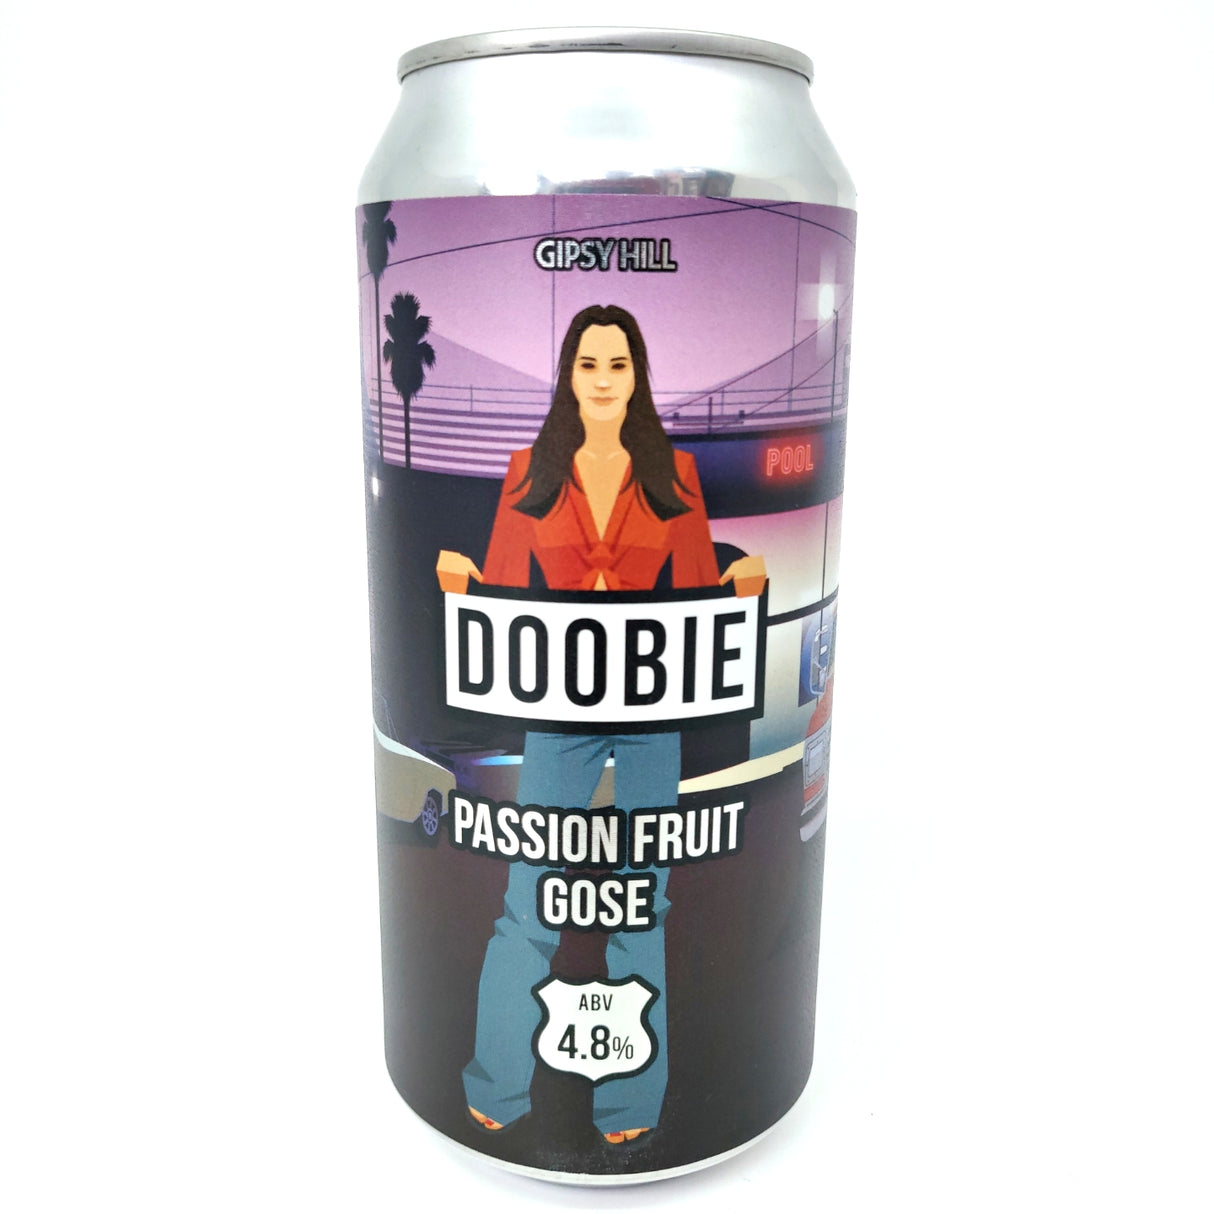 Gipsy Hill Doobie Passion Fruit Gose 4.8% (440ml can)-Hop Burns & Black